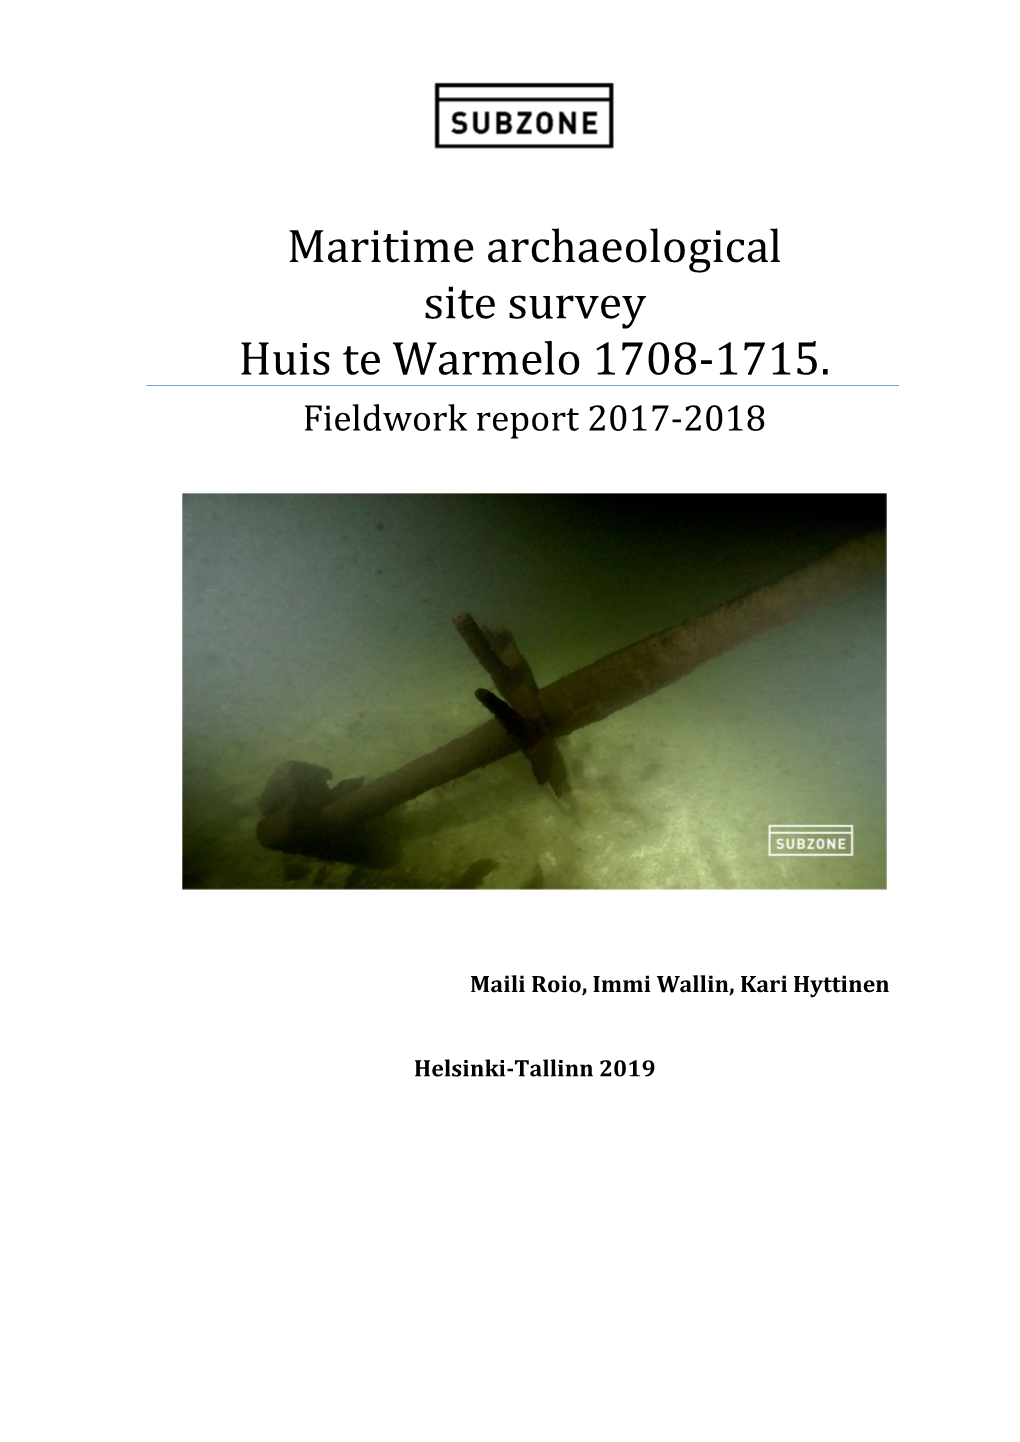 Maritime Archaeological Site Survey Huis Te Warmelo 1708-1715. Fieldwork Report 2017-2018